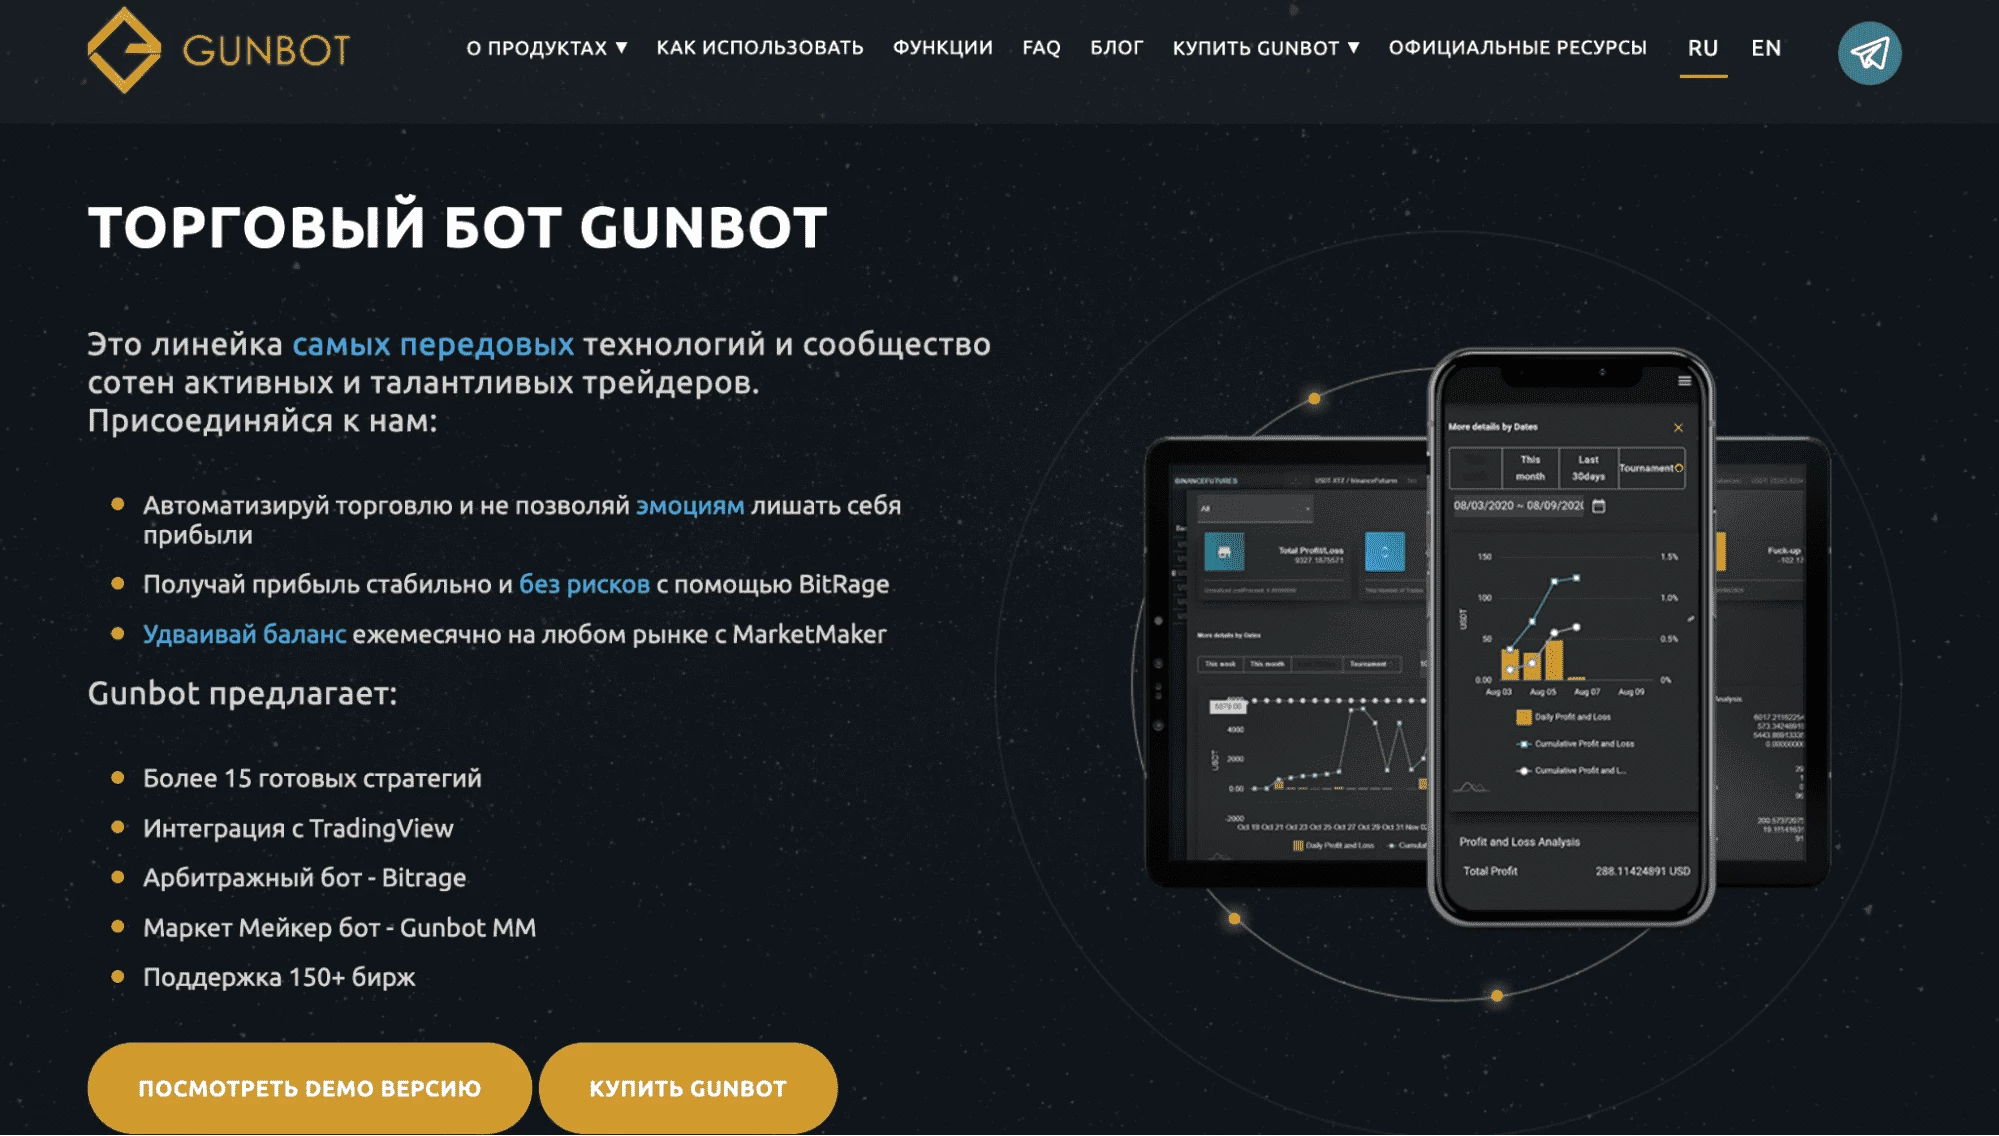 Интерфейс сайта GunBot